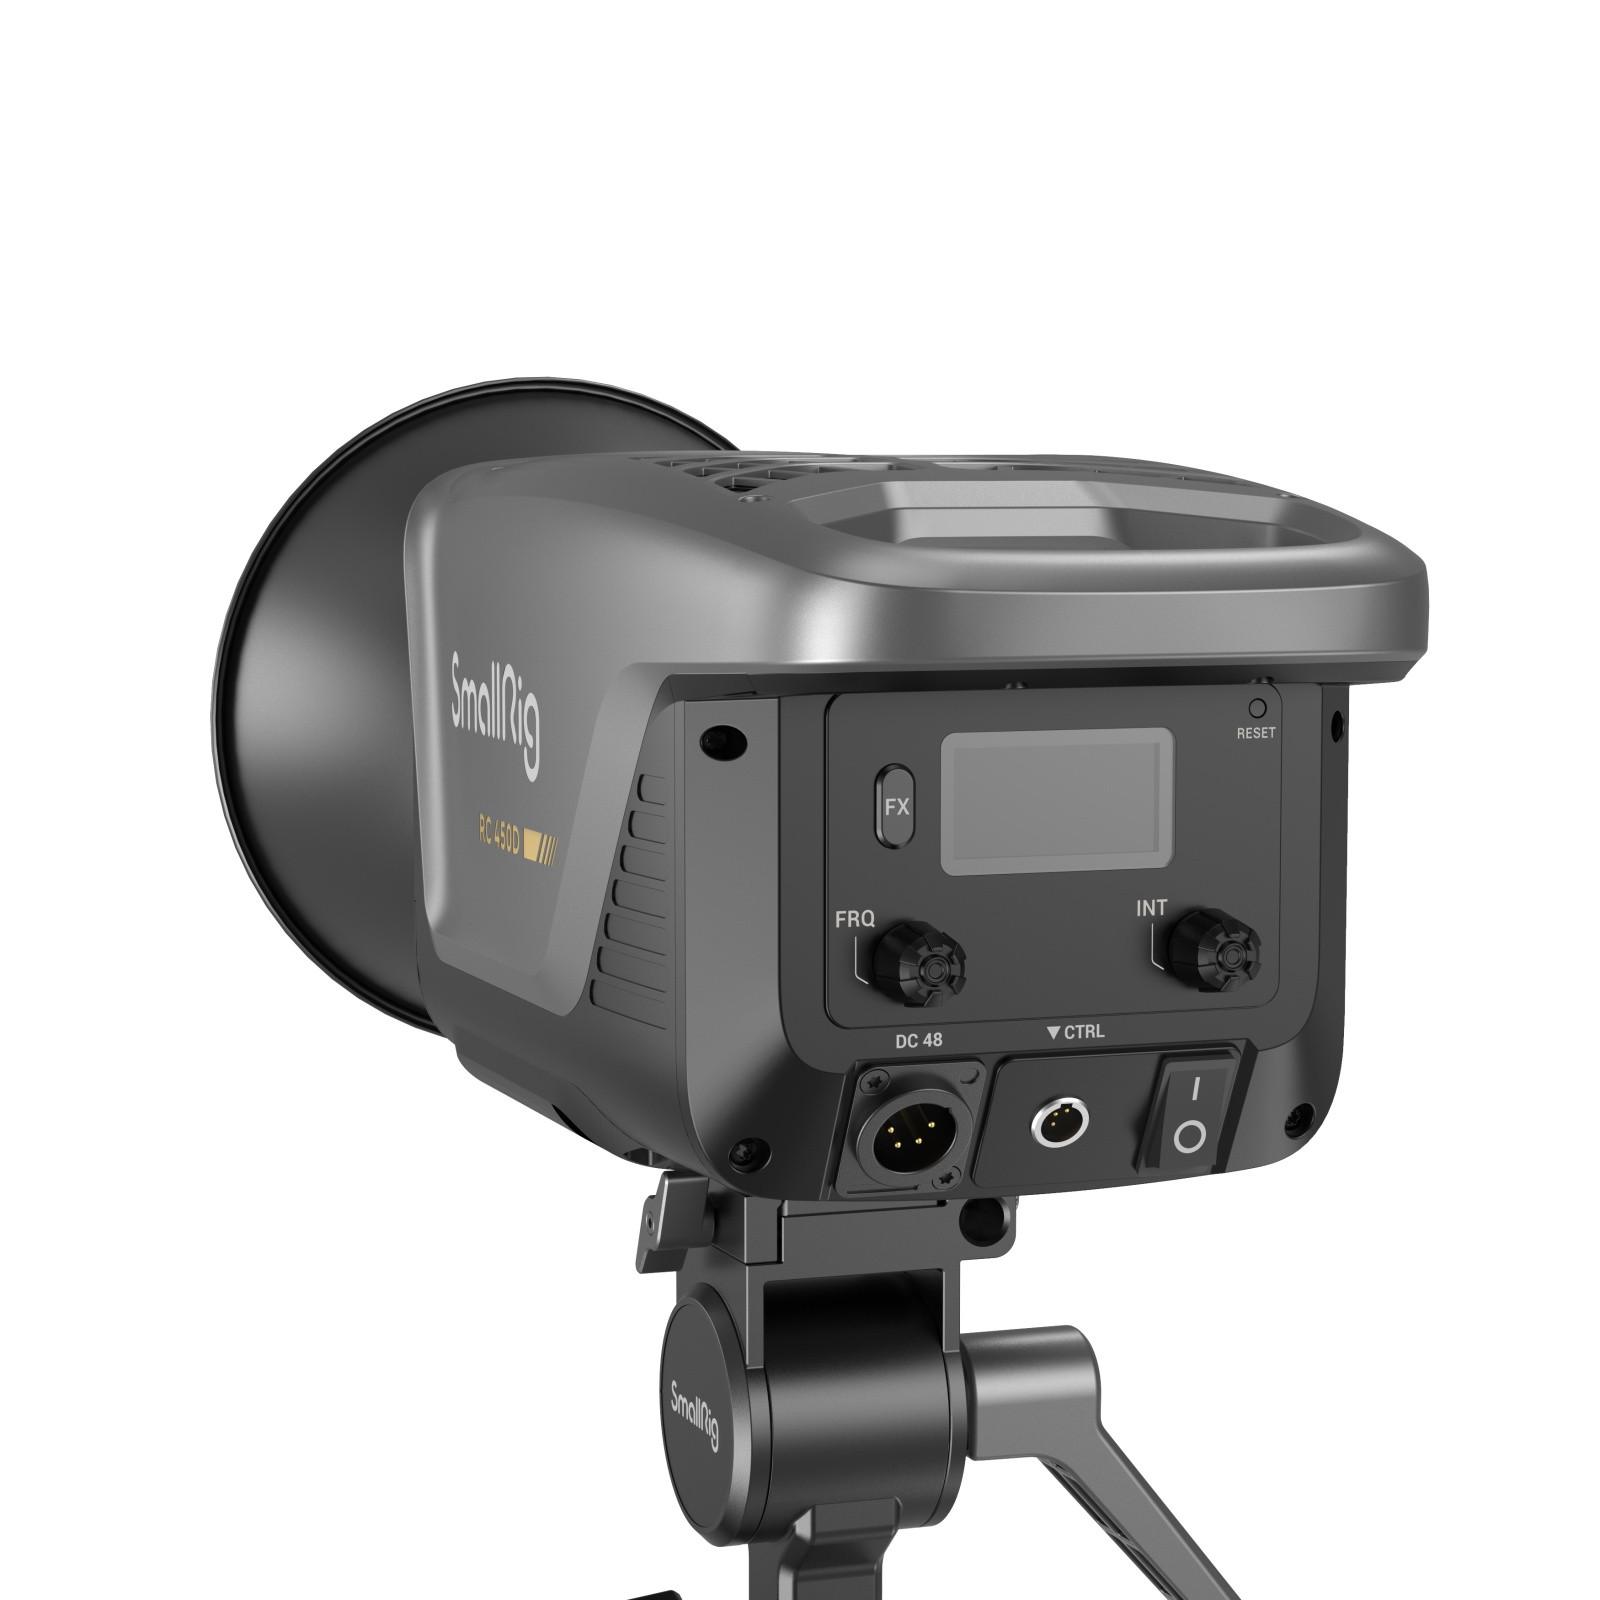 SmallRig RC450D COB LED Video Light (AU) 3973